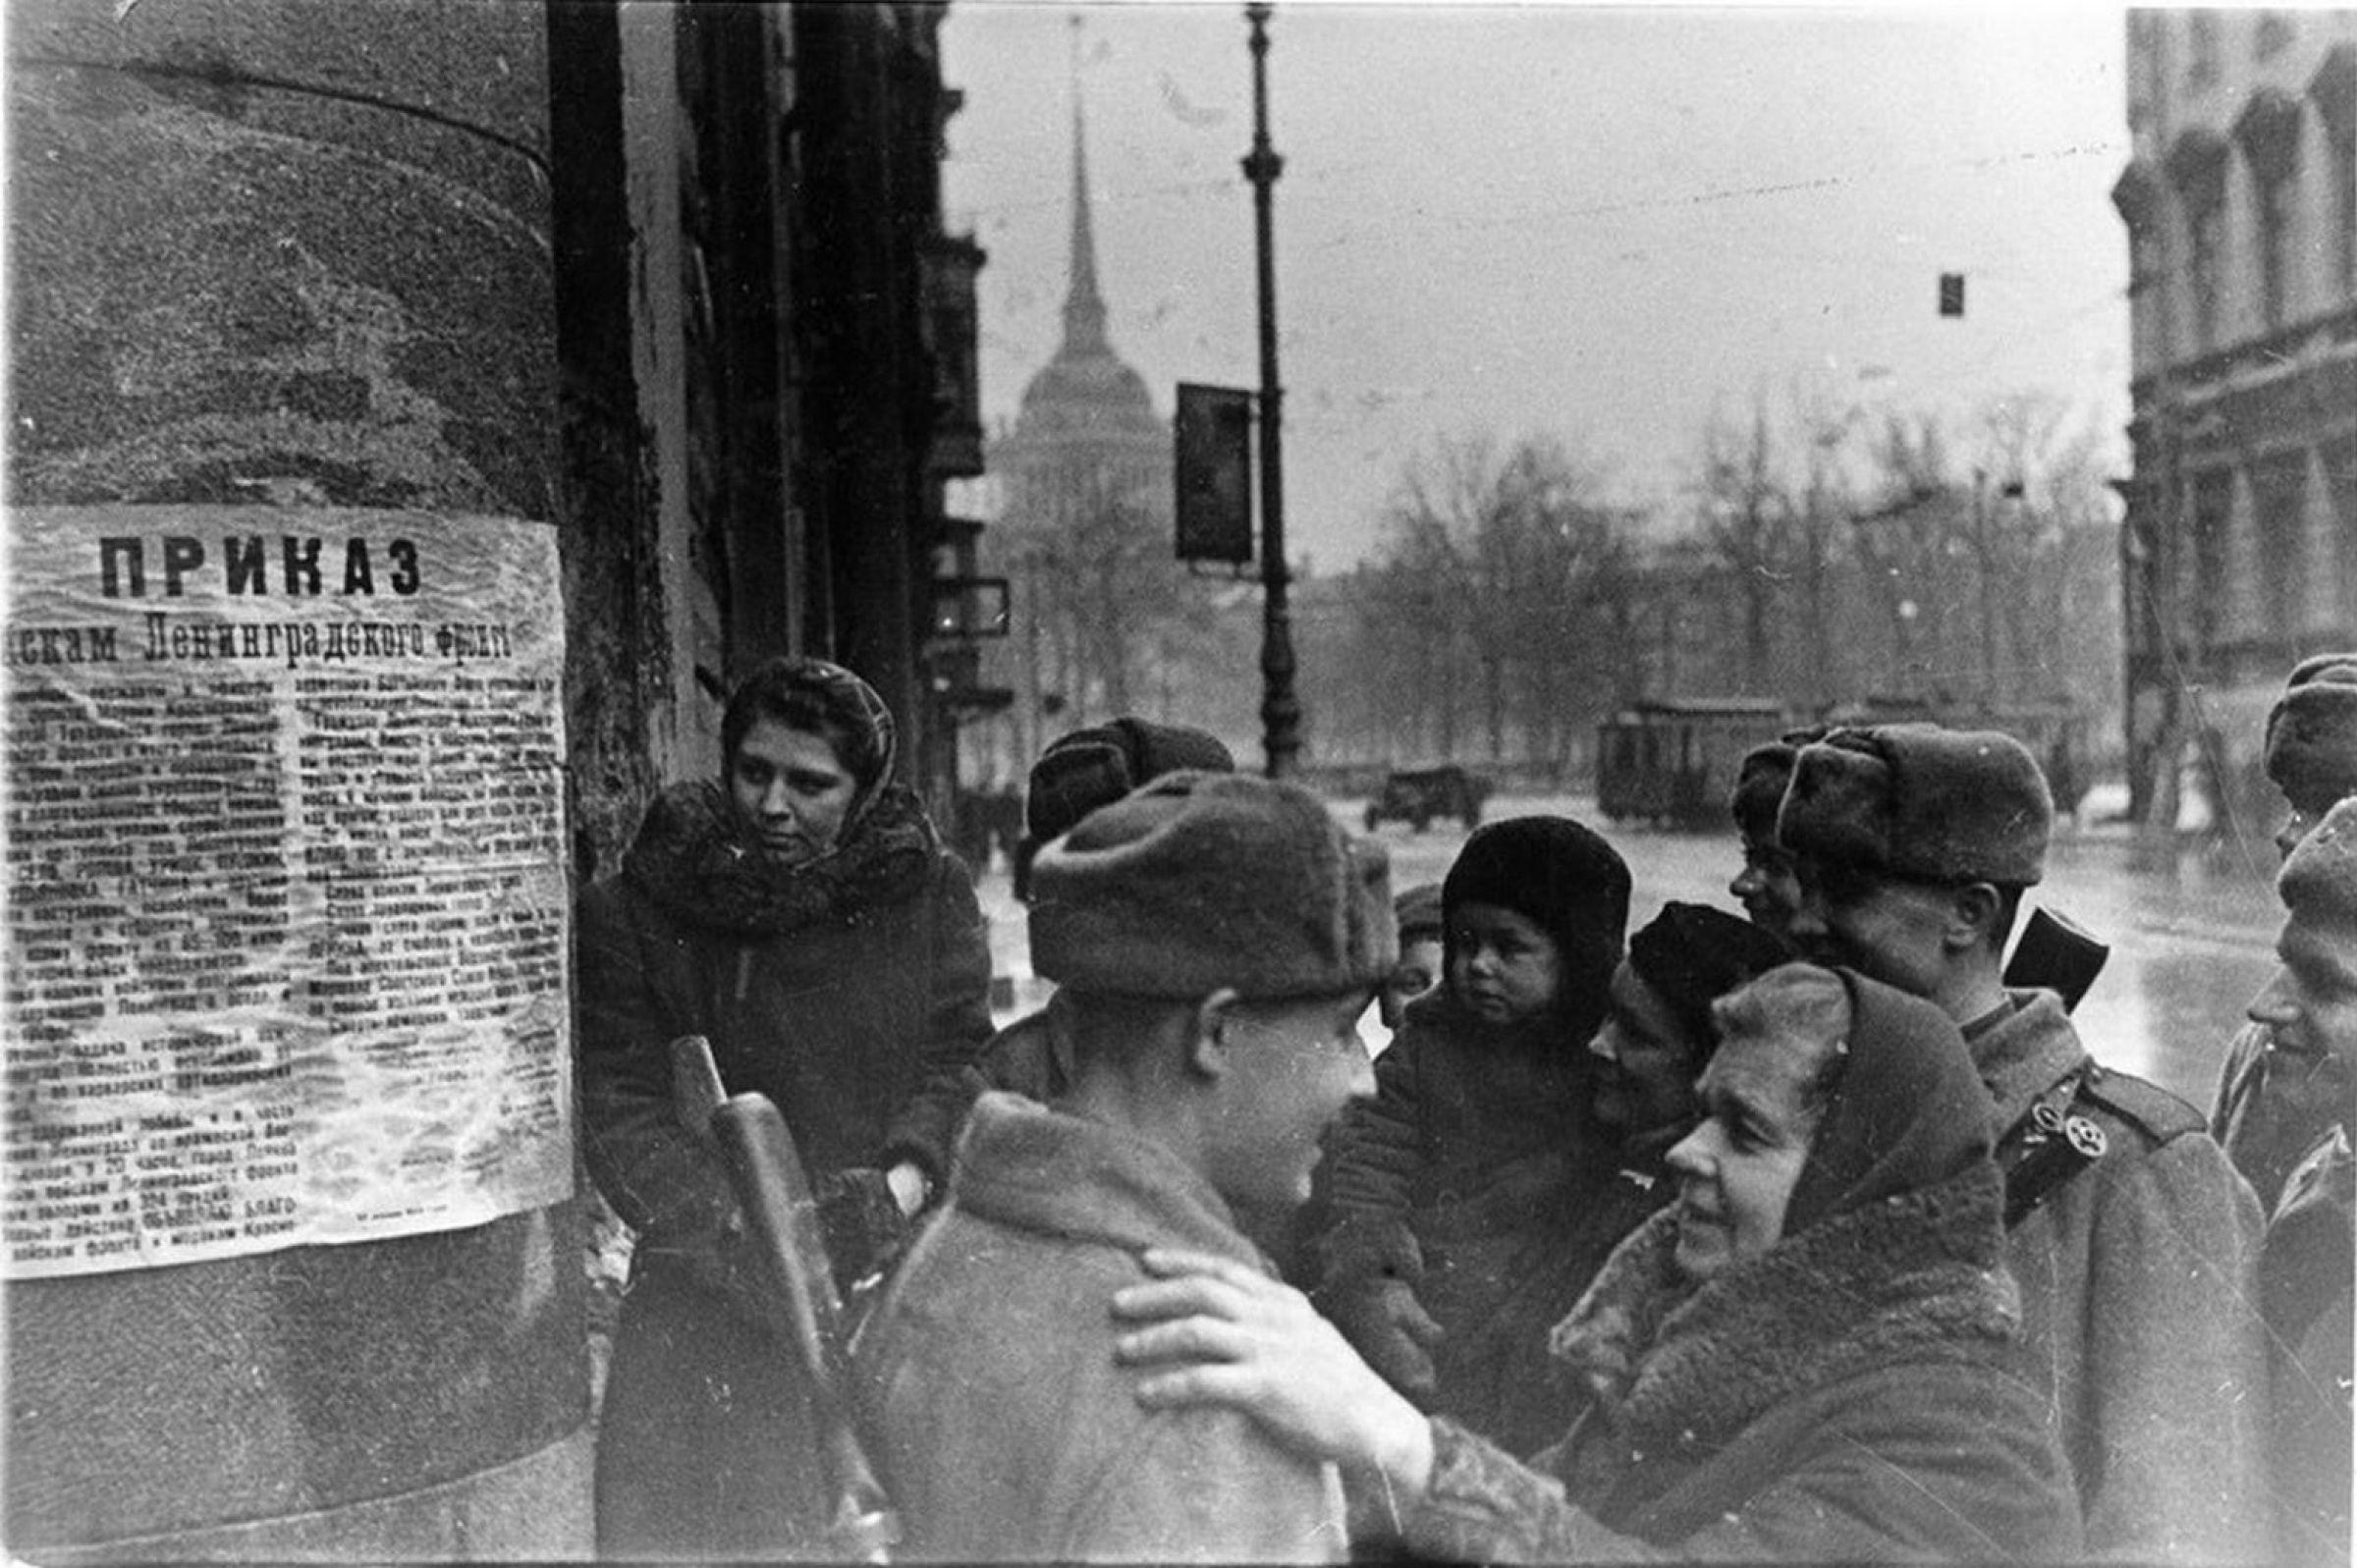 Блокада 27 января 1944 года